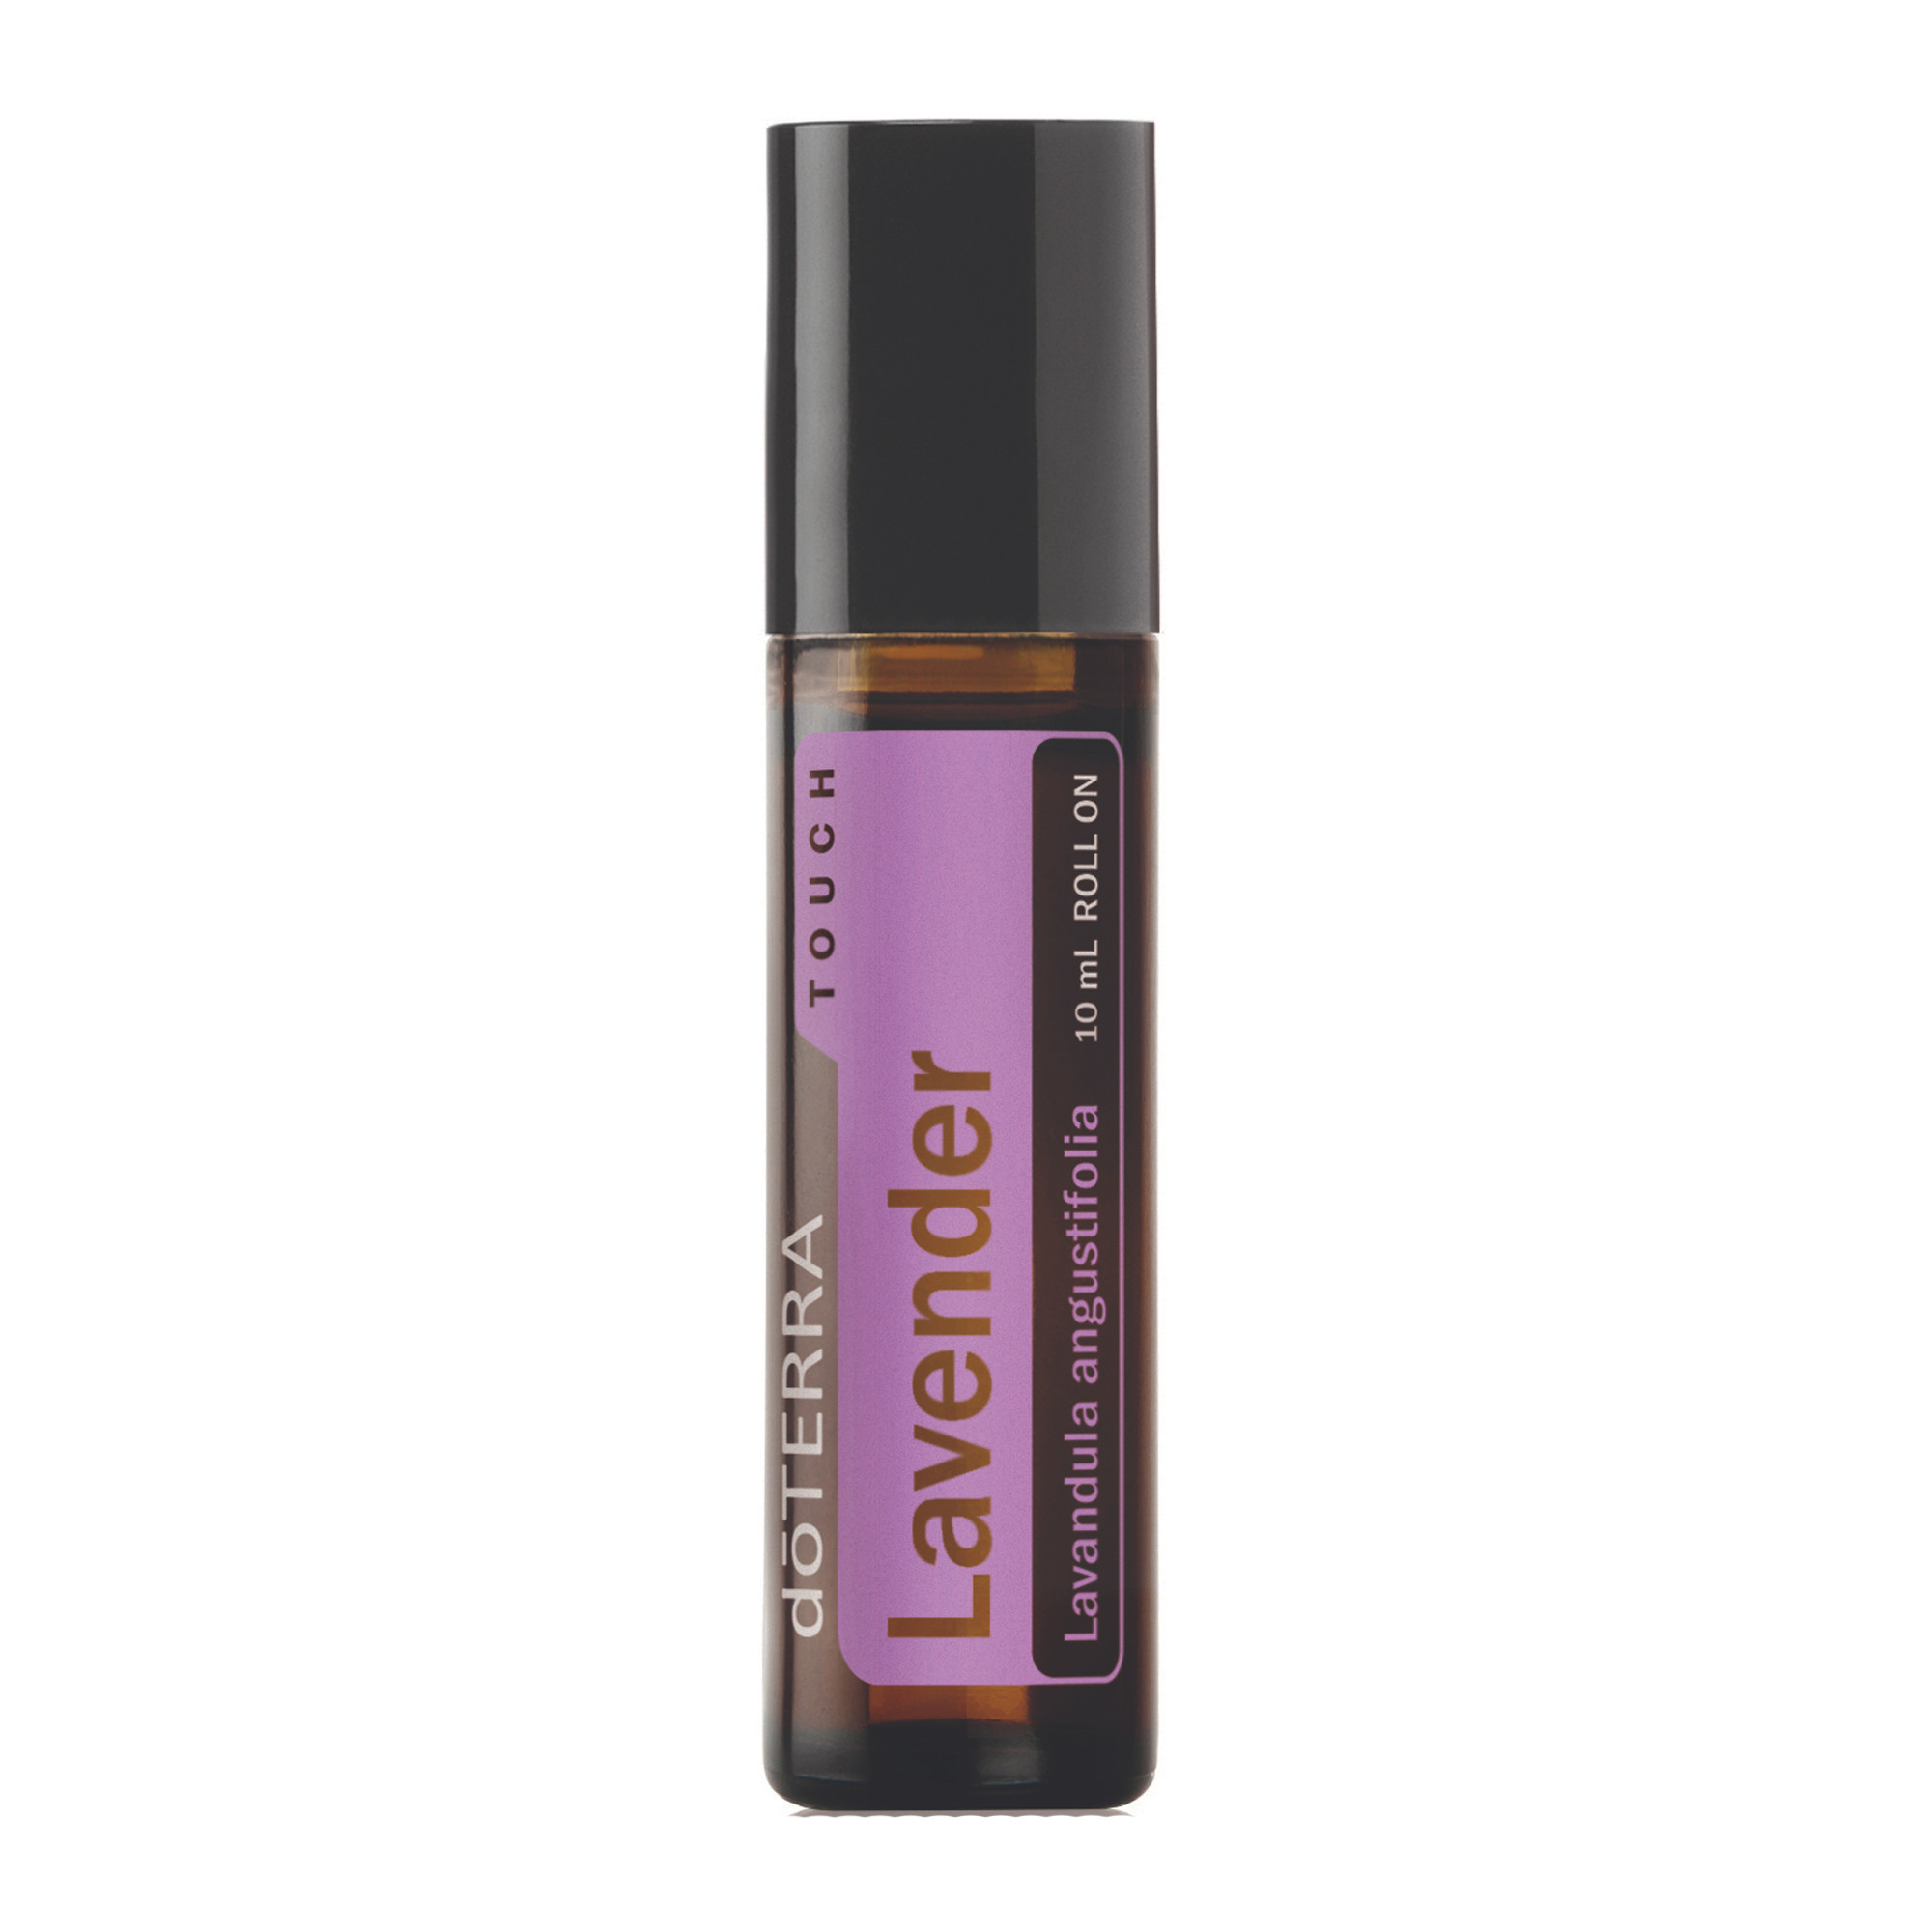 DoTERRA Lavender Essential Oil Touch Blend - Эфирное масло роллер Лаванда